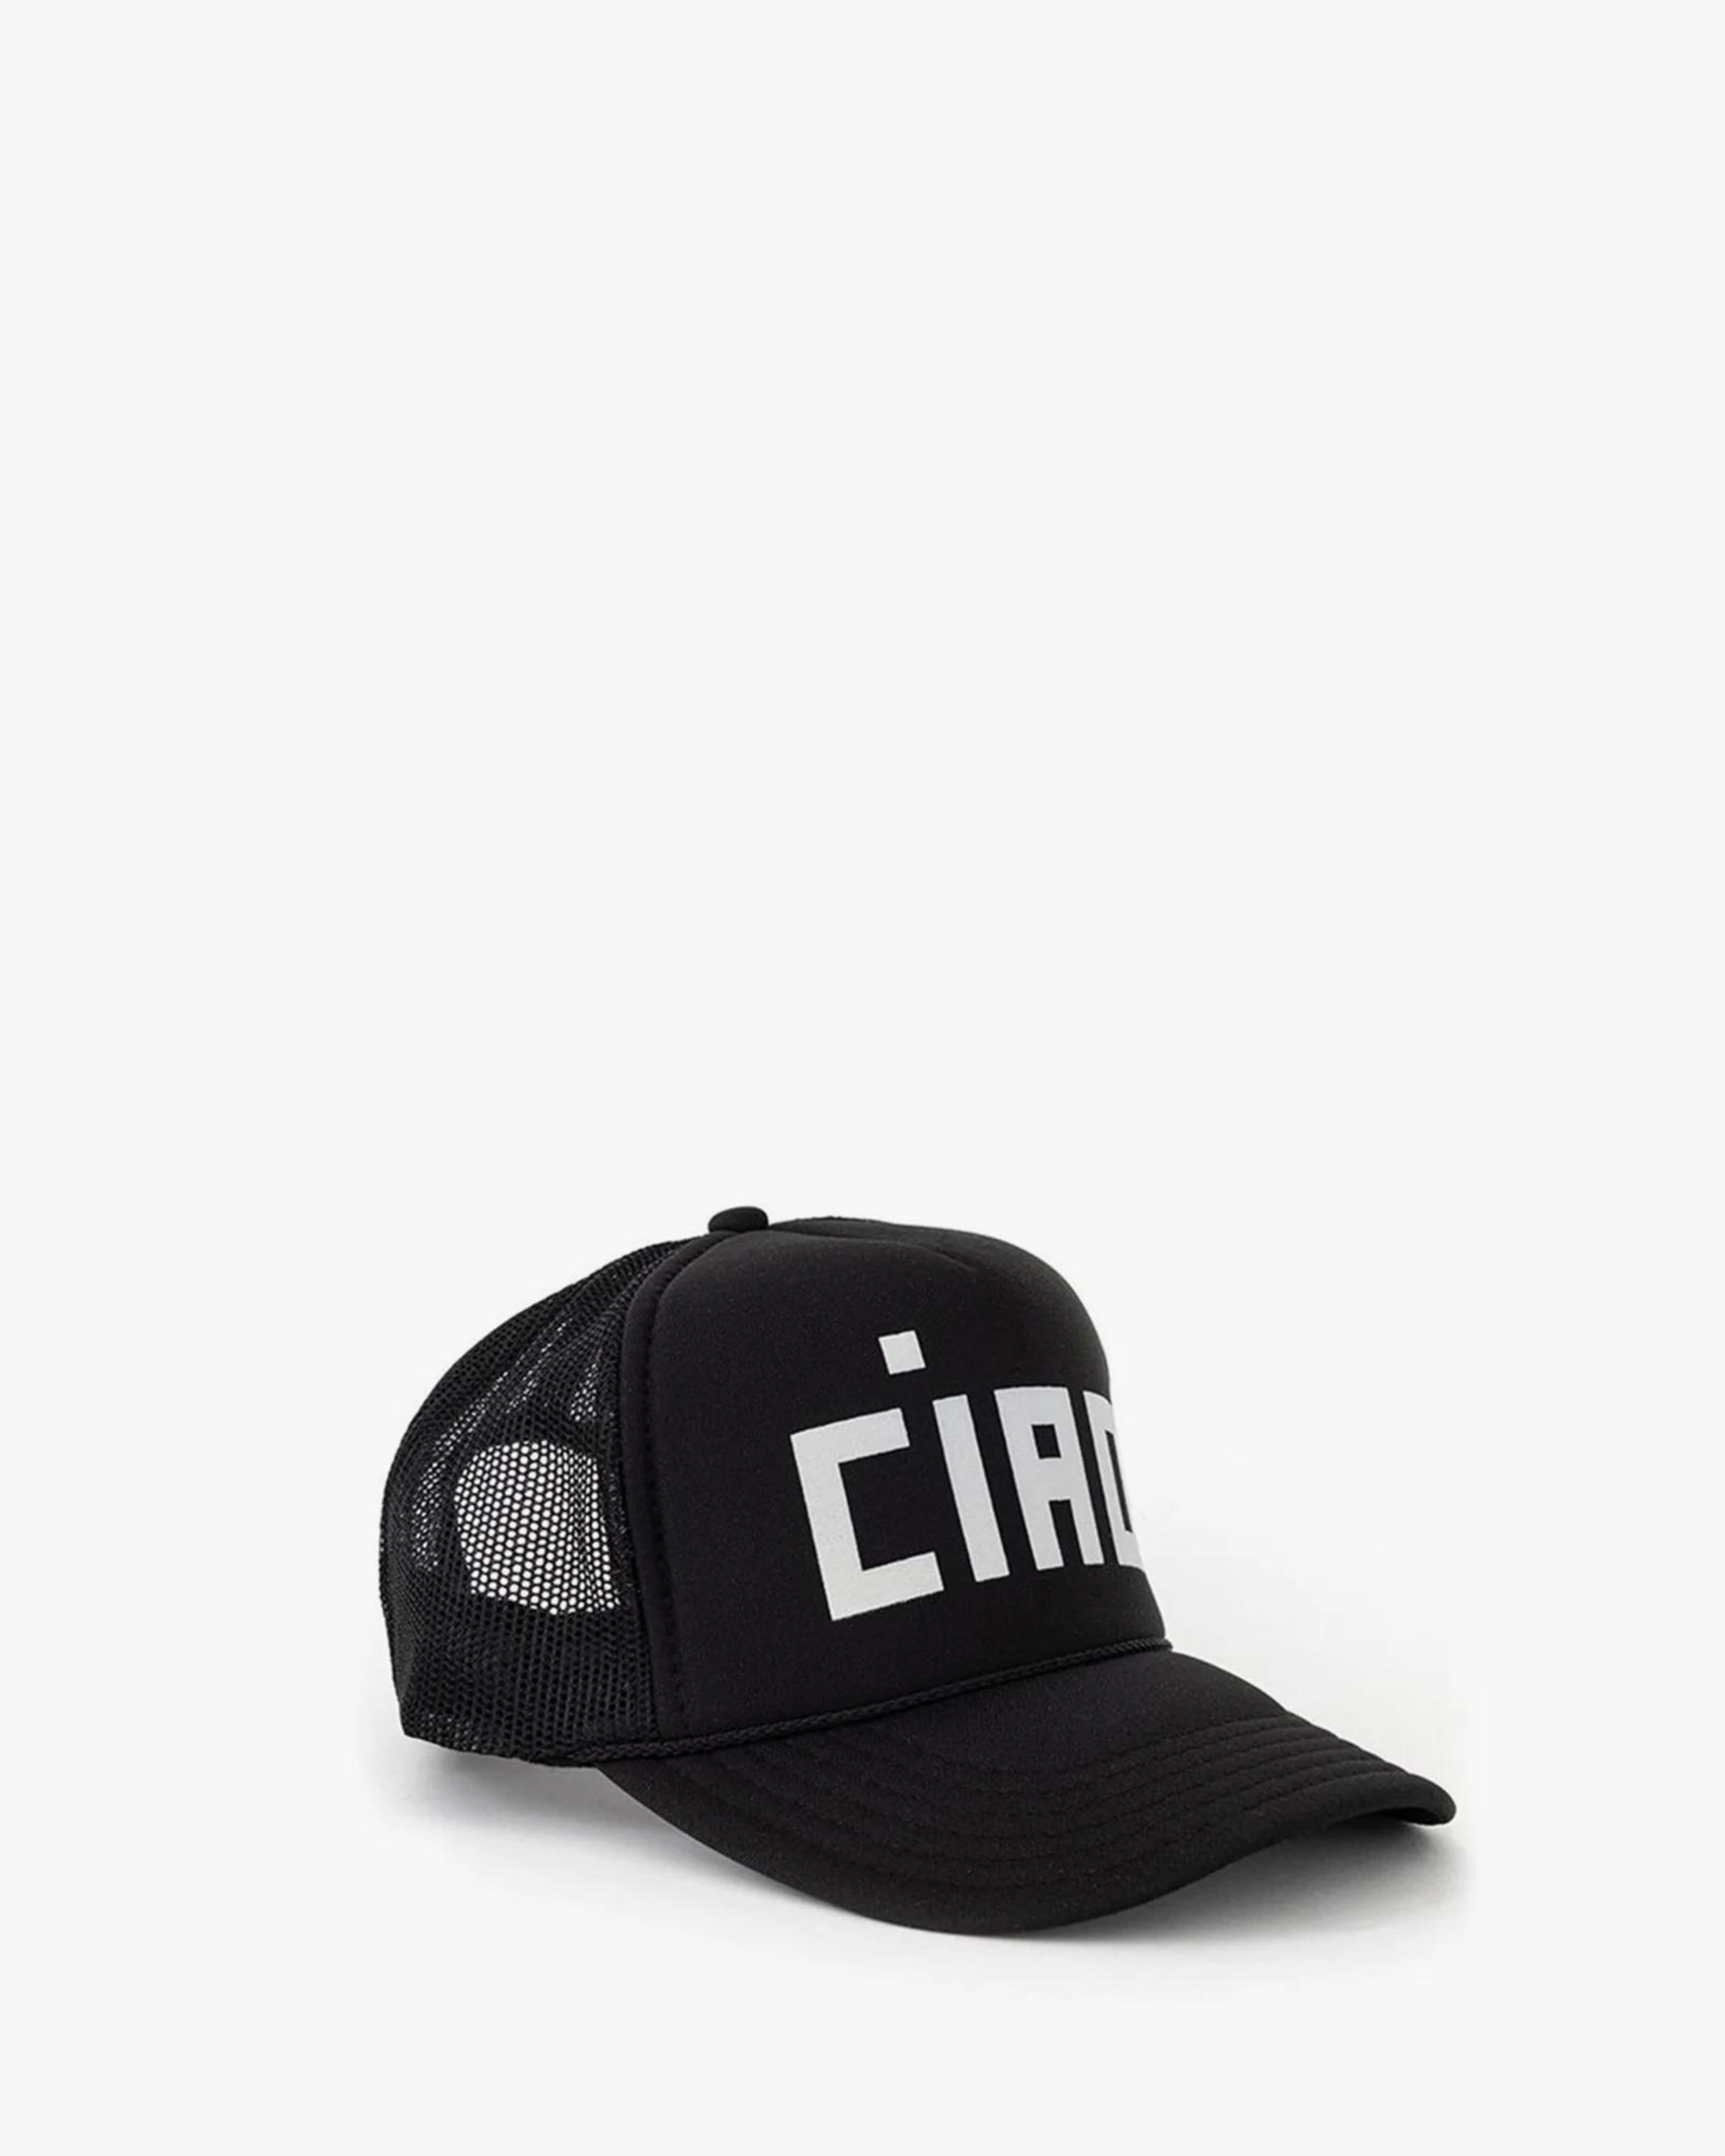 Clare V. Trucker Hat in Black Ciao